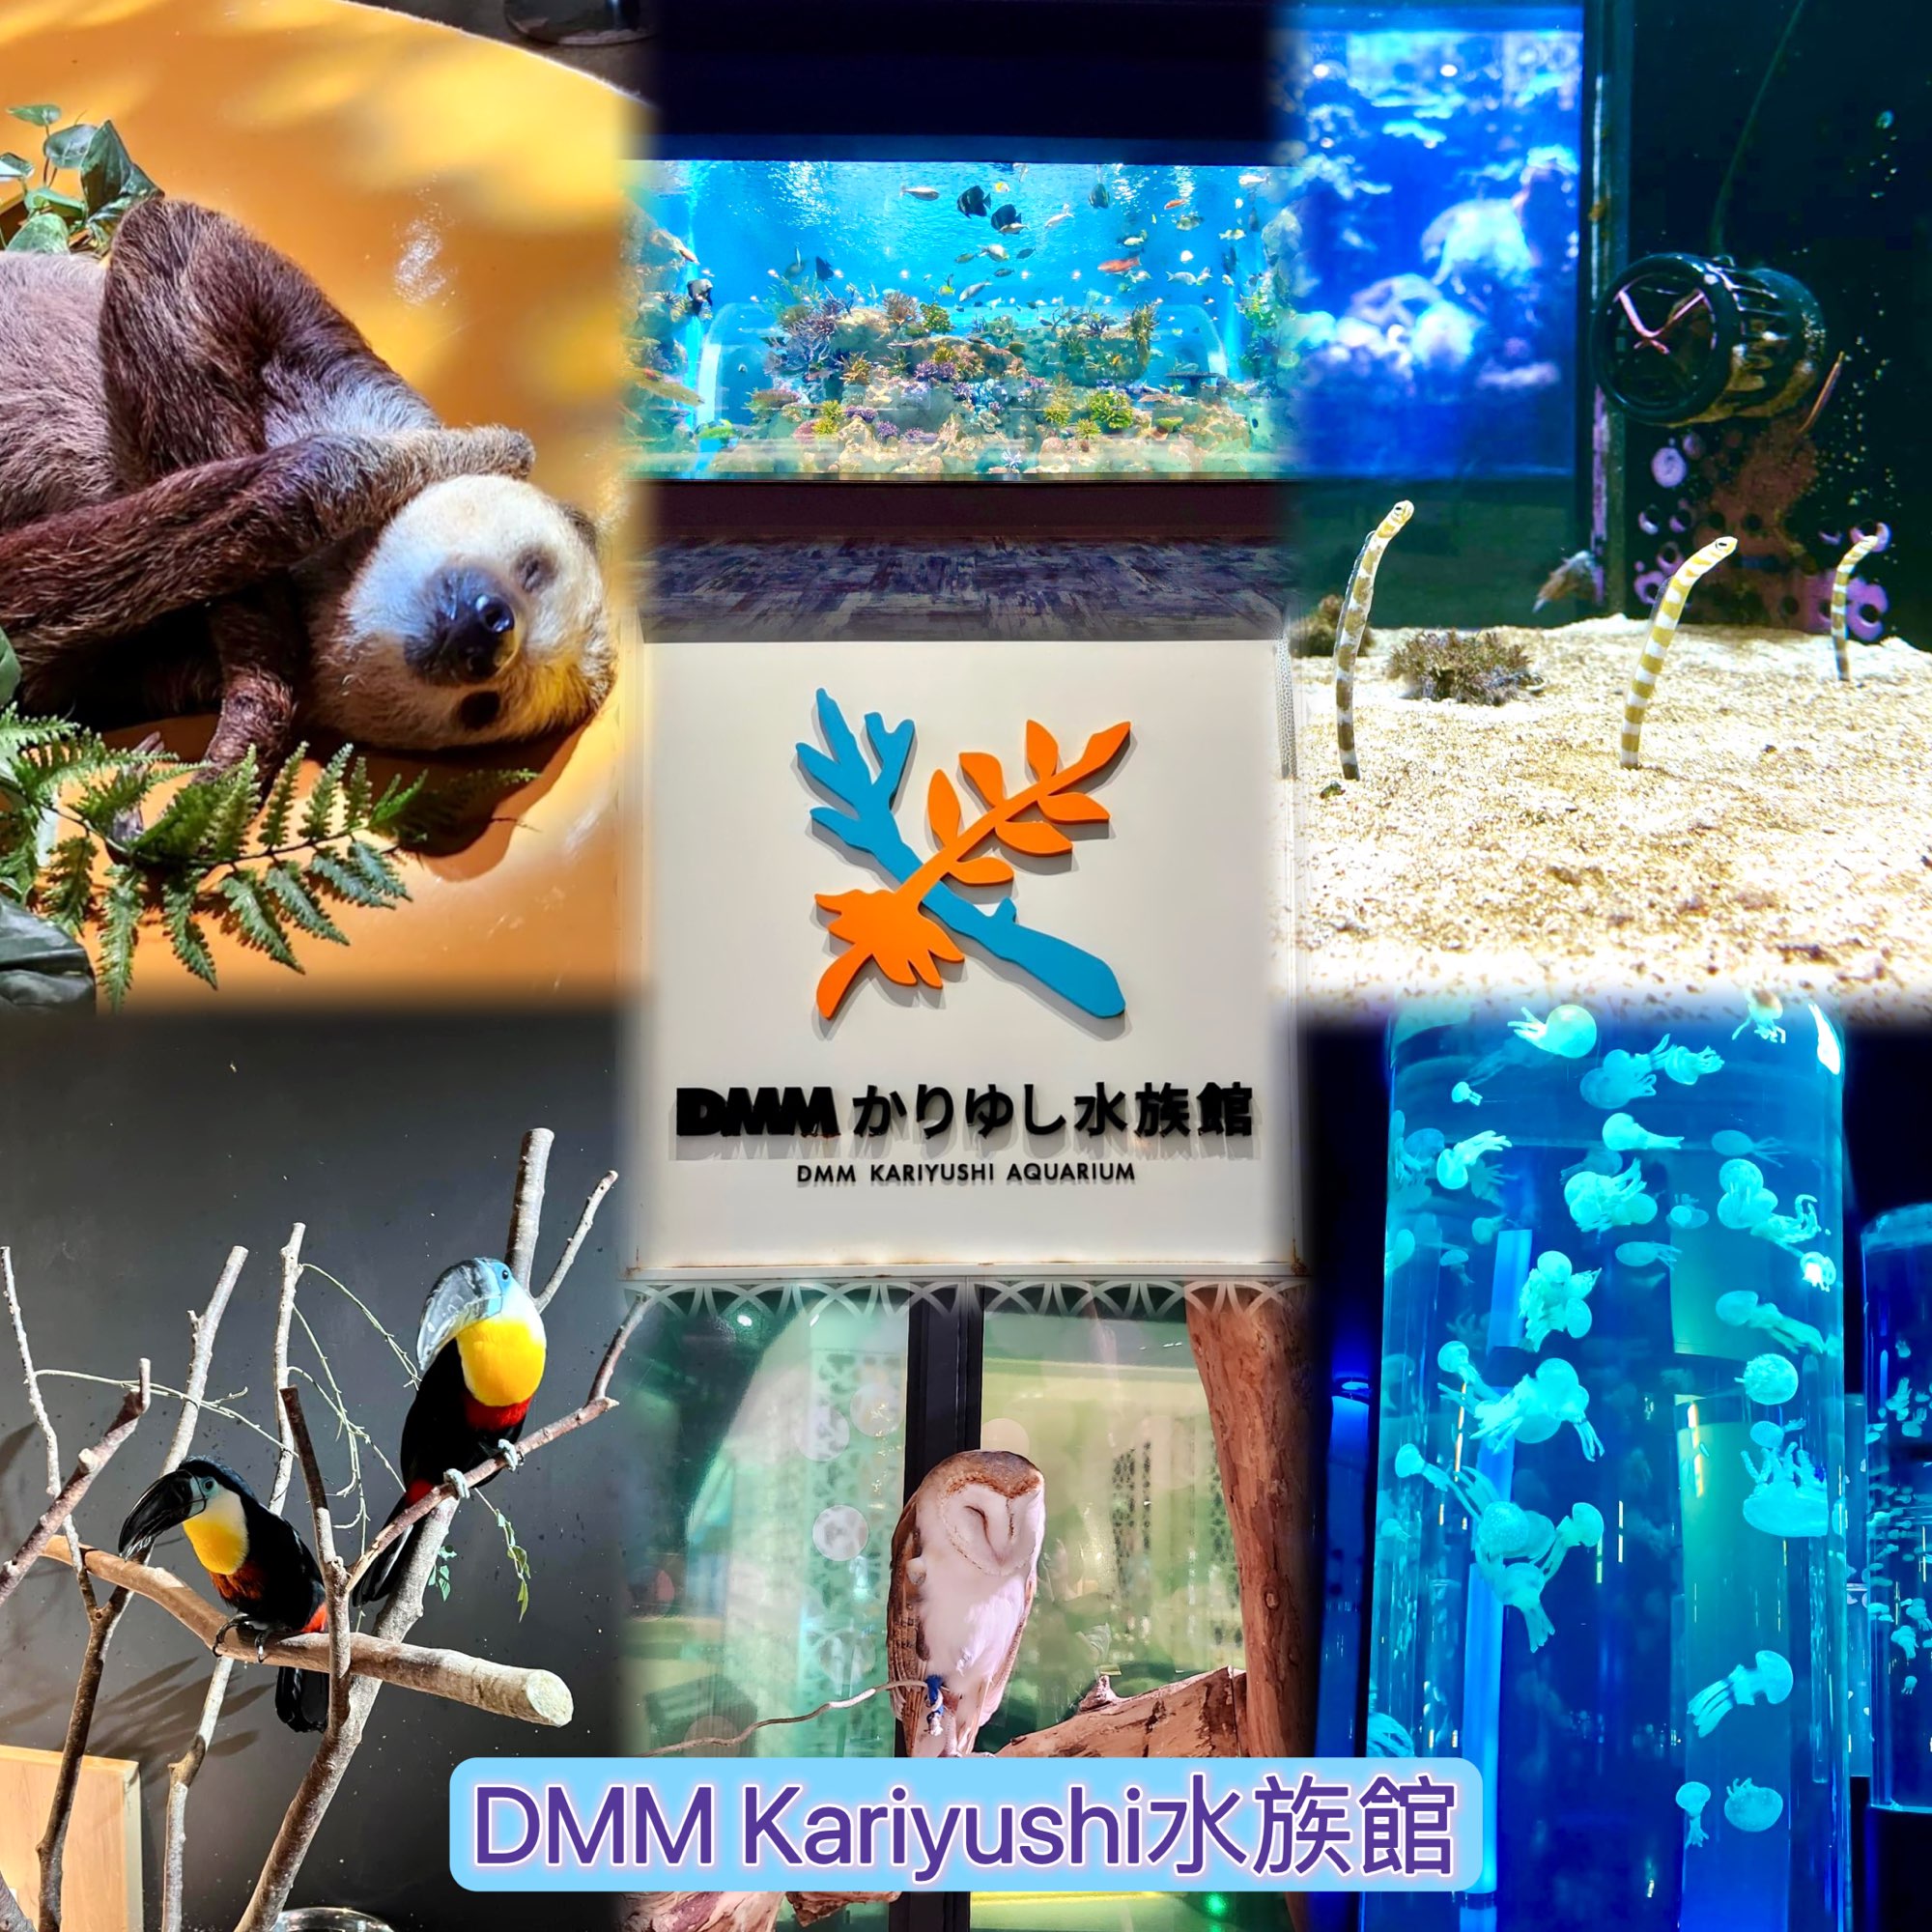 DMM Kariyushi水族馆-将科技融入水族馆内